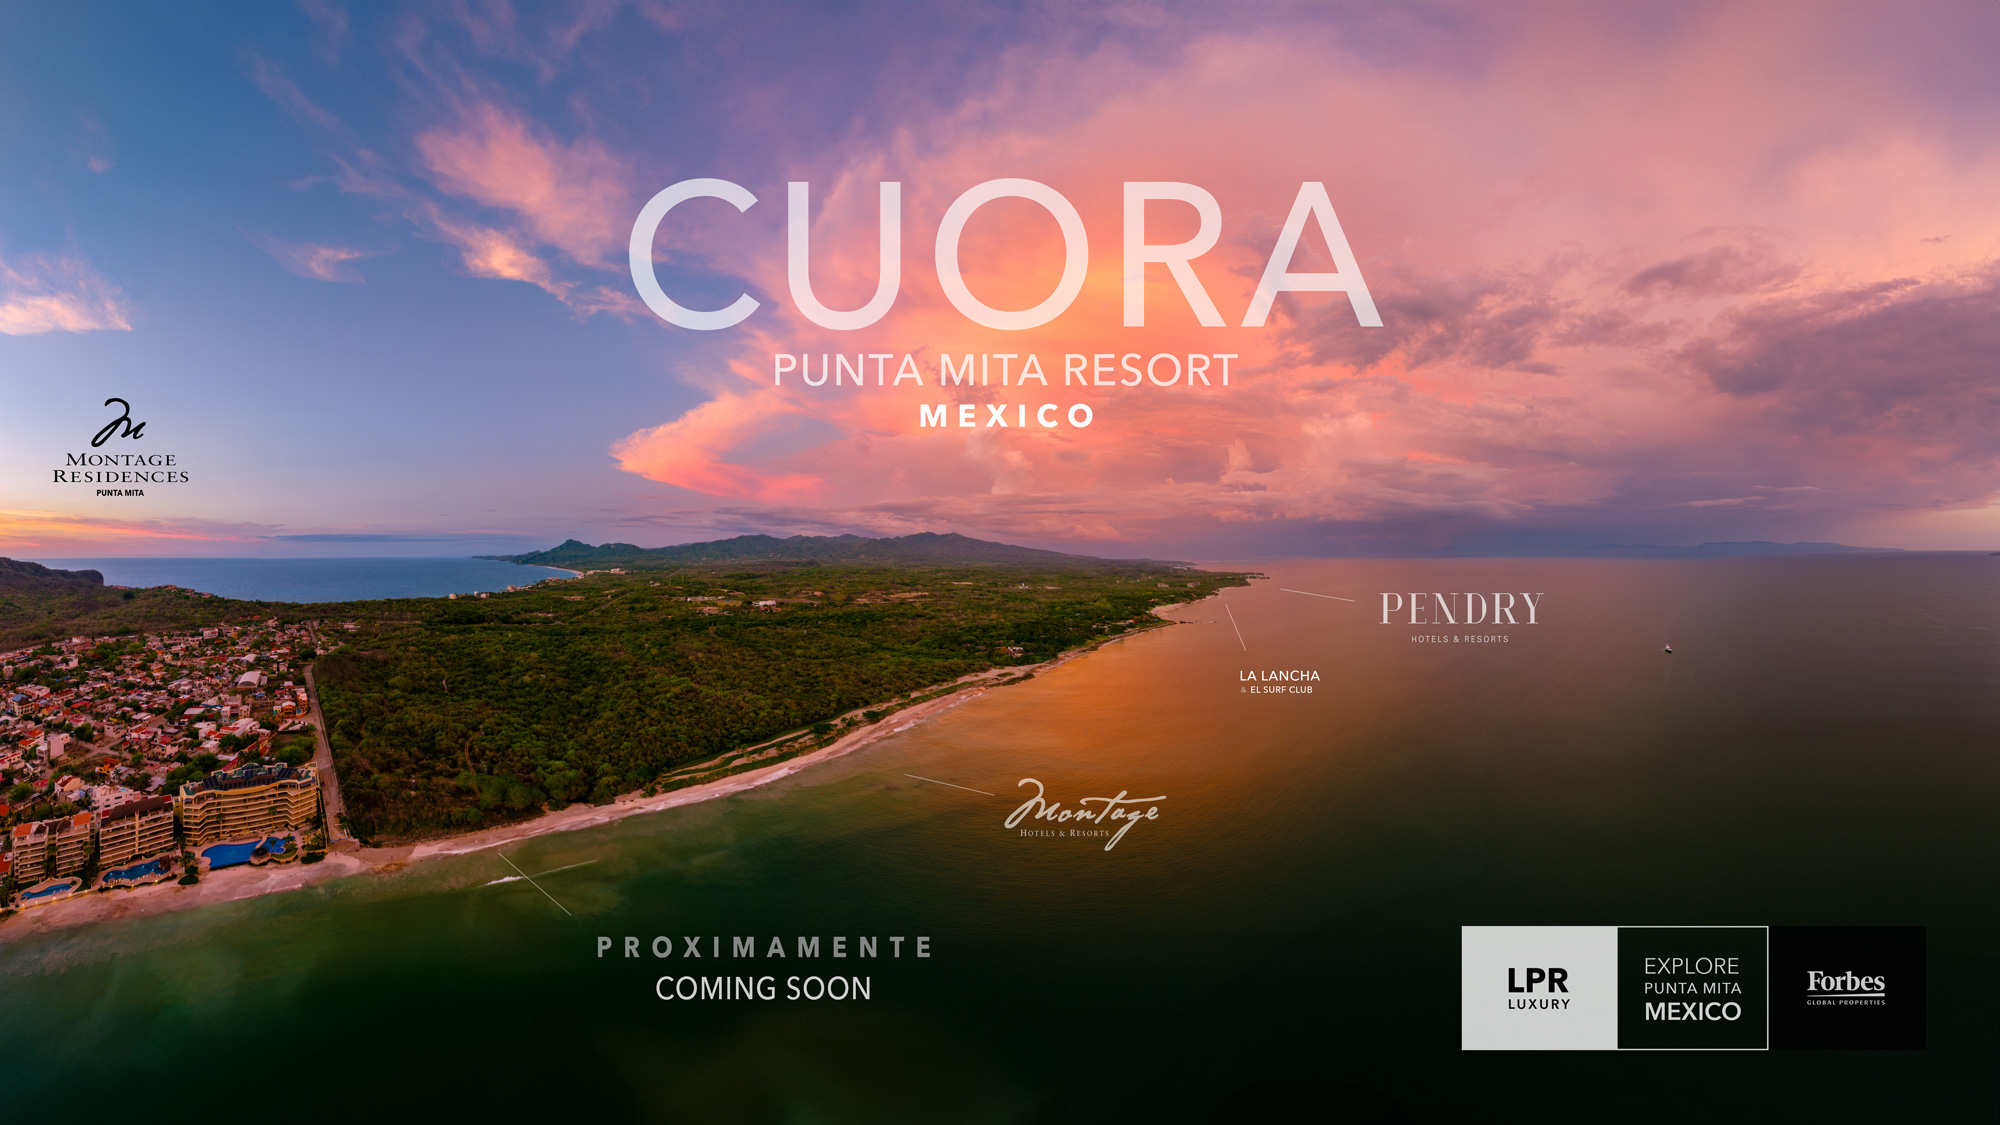 CUORA - Punta Mita Resort beachfront condos next to the coming Montage, Punta Mita, Mexico.